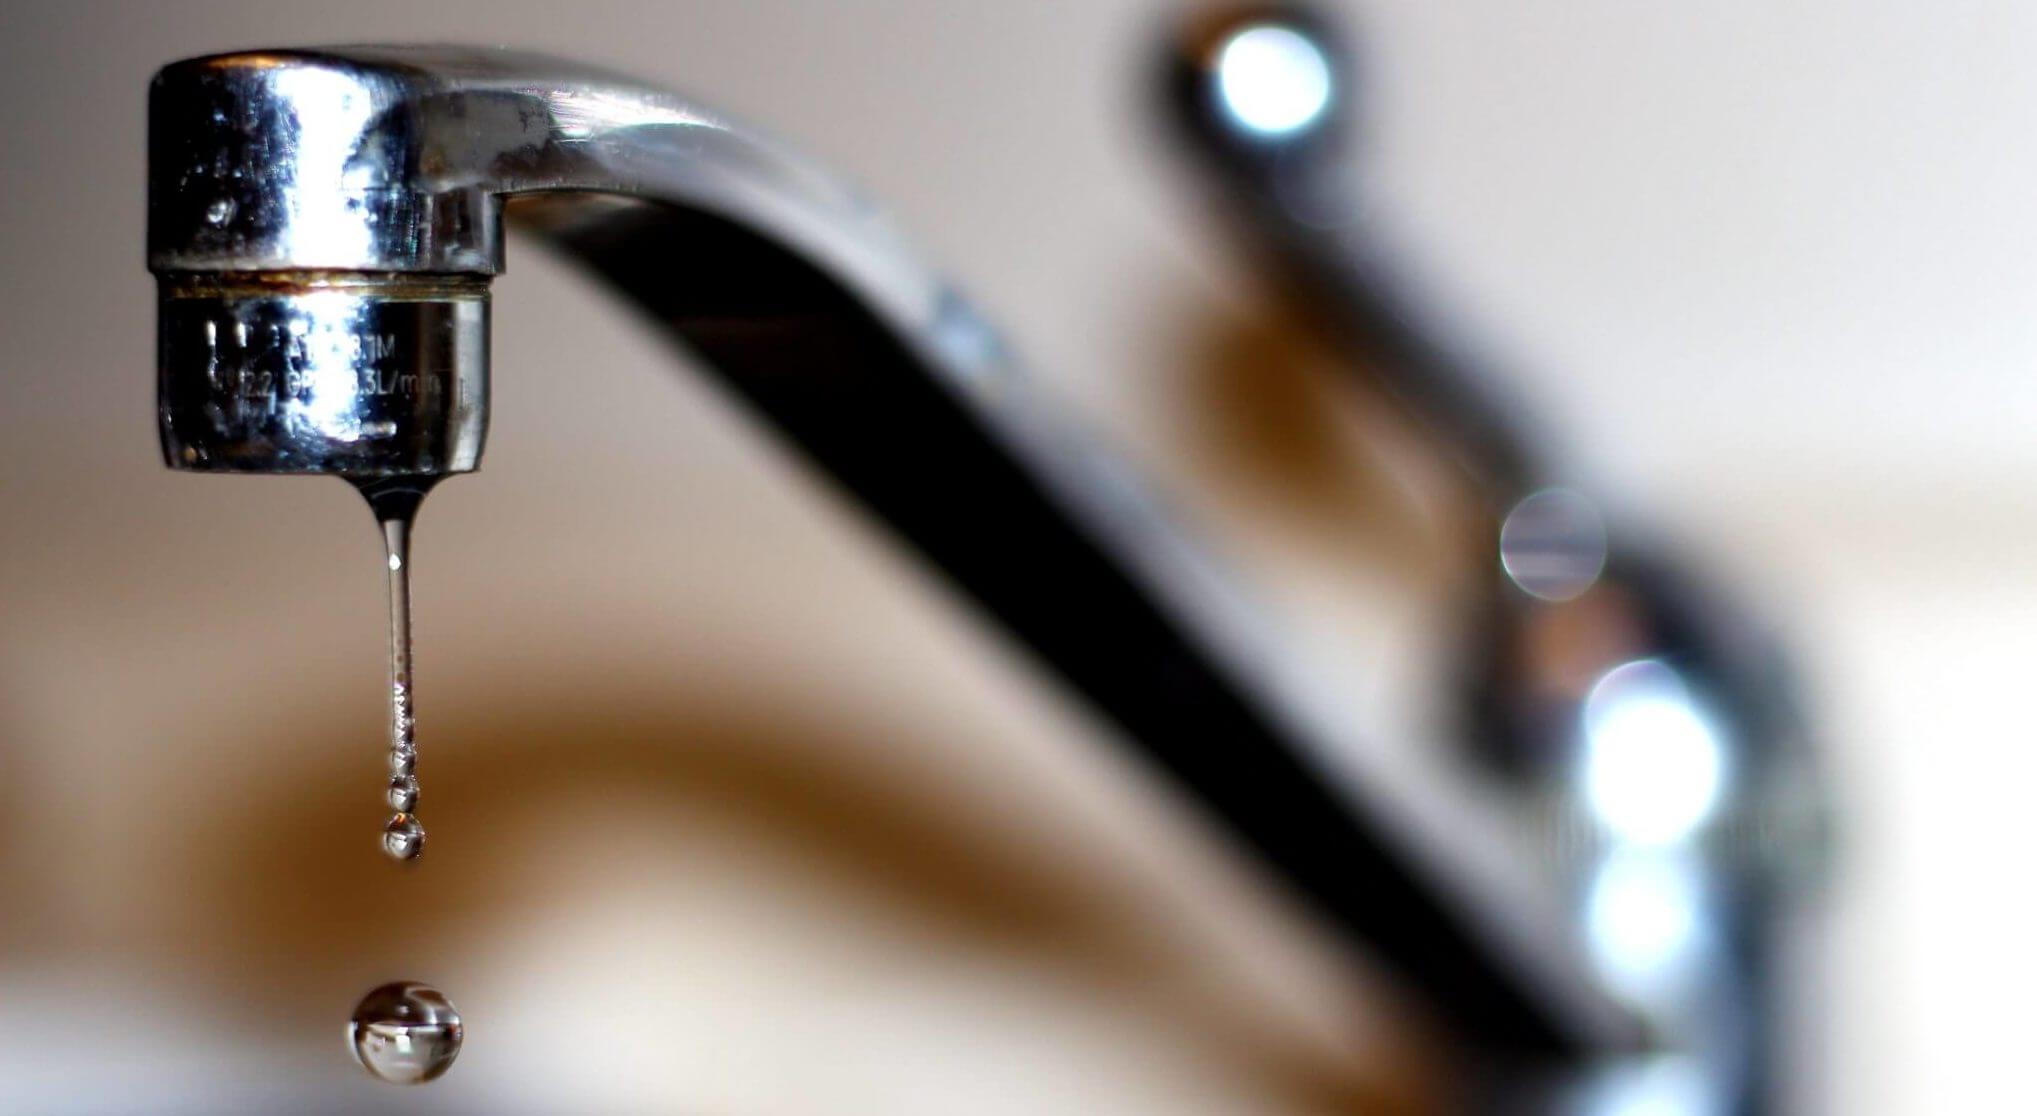 replachsuttof valve bathroom comprsio dripping bathroom sink